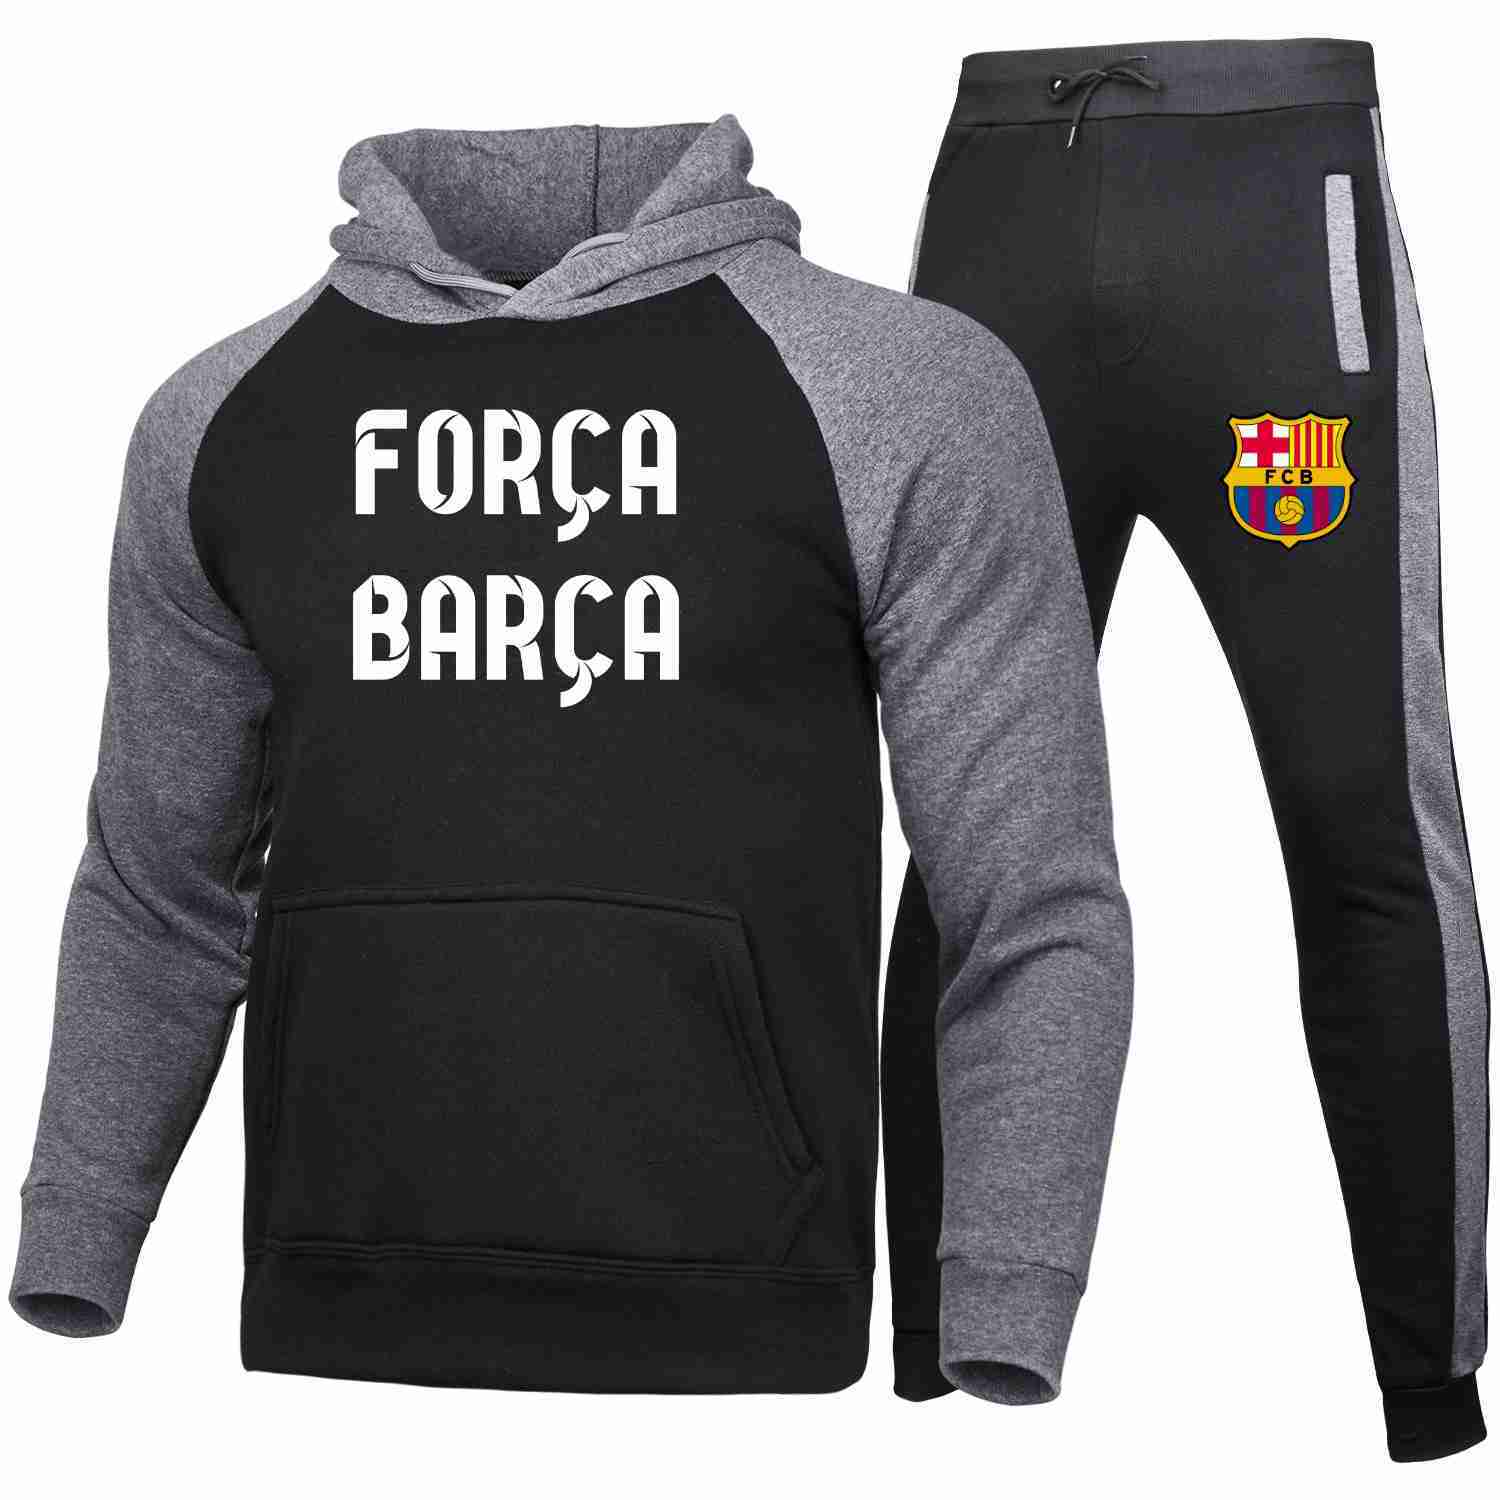 FC BARCELONA Official Forca Barca Color Block Hoodie Pants Sets